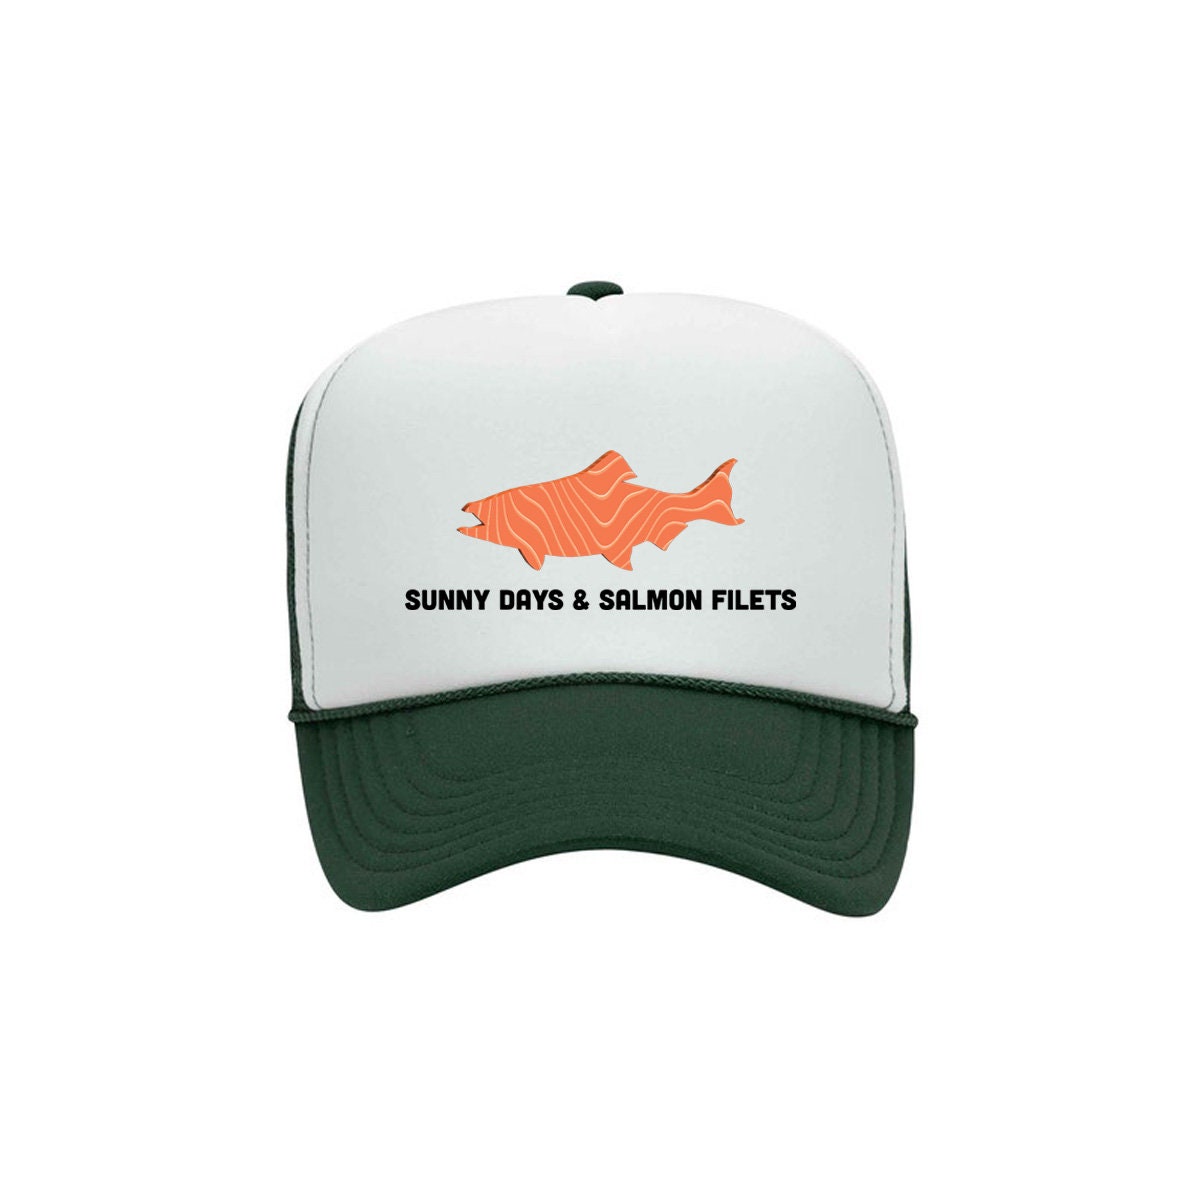 Salmon Fishing Hat, Sunny Days And Salmon Filets, Salmon Hat, Fishing Hat, Adjustable Snapback, Fly Fishing Cap, 10 Hat Options, Mesh Caps